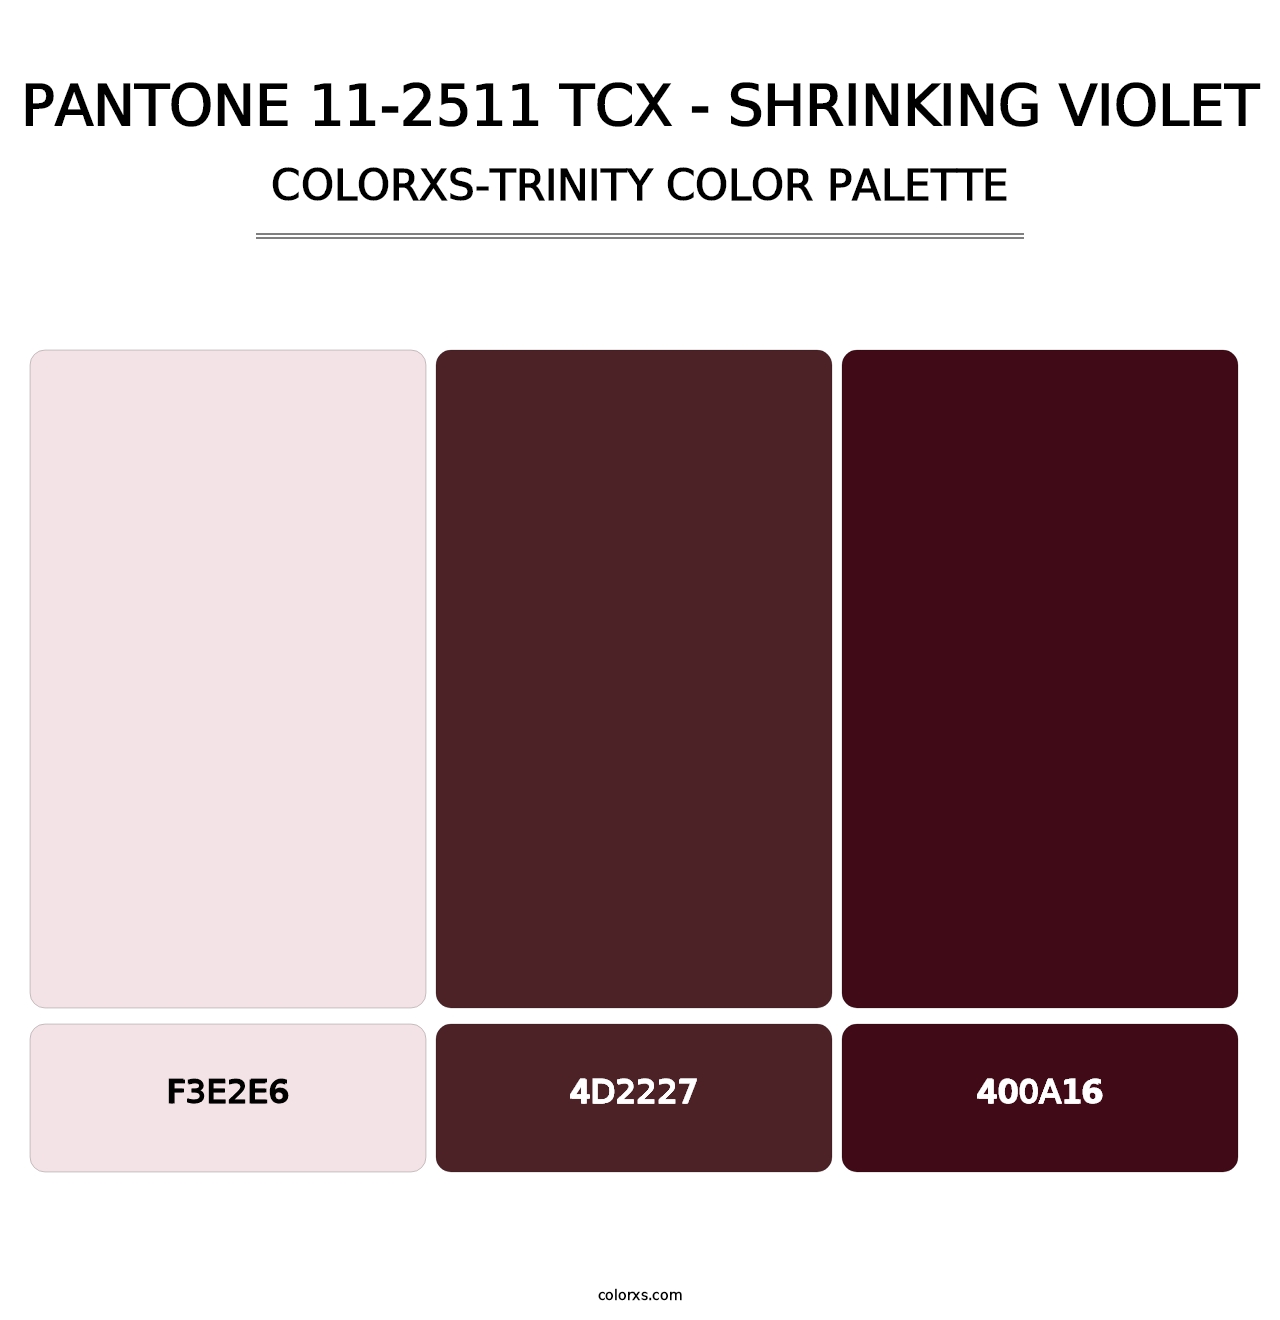 PANTONE 11-2511 TCX - Shrinking Violet - Colorxs Trinity Palette